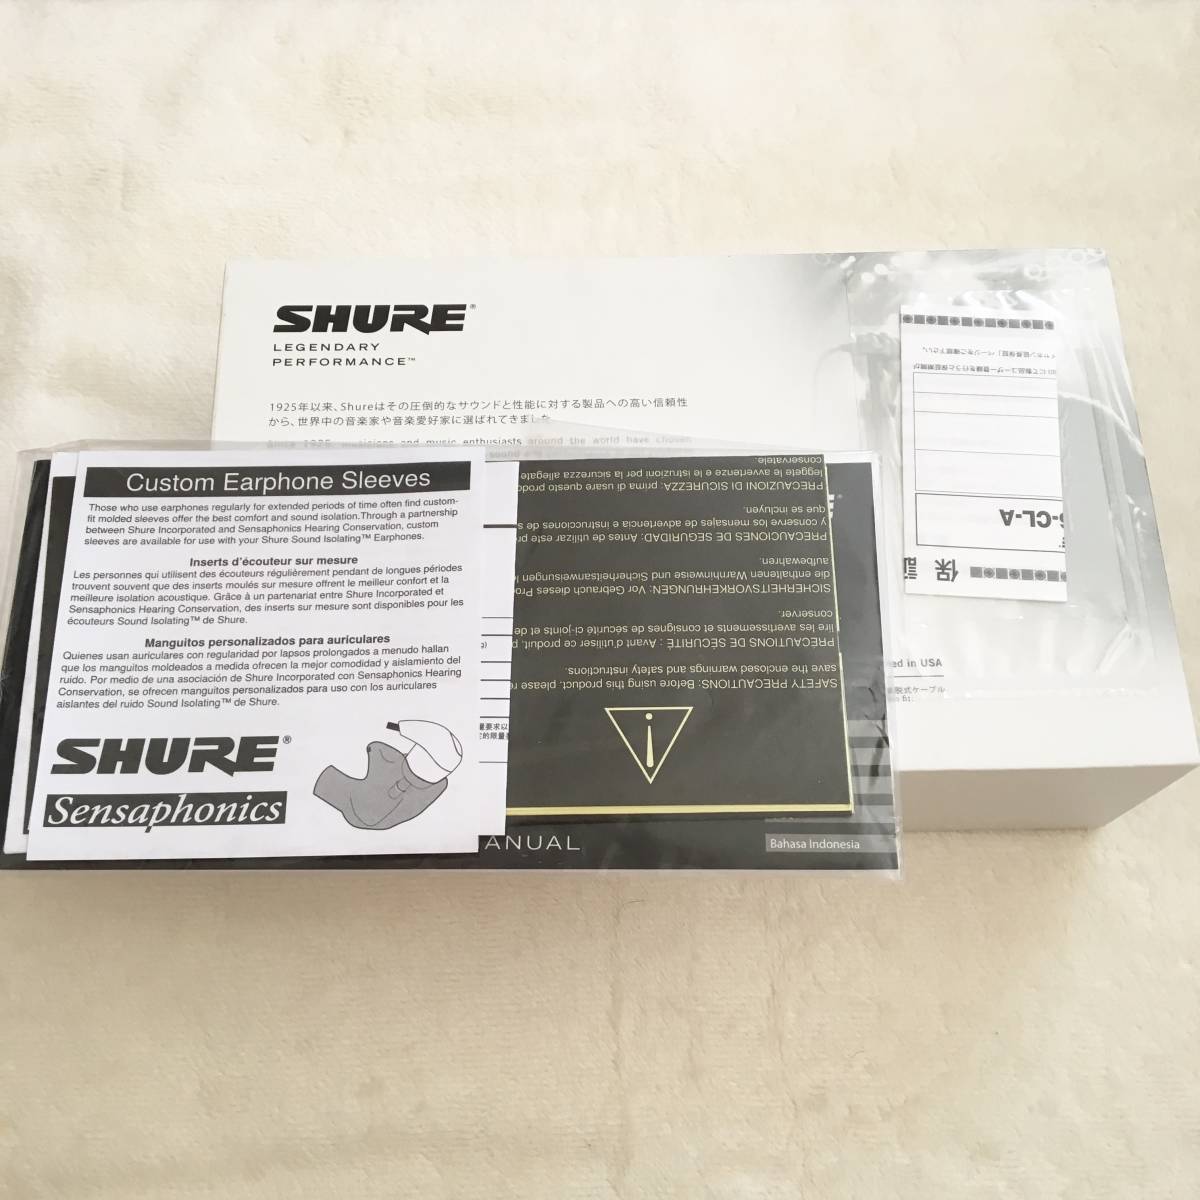 SHURE Sure SE 846 CL - A帶透明盒二手美容品免費送貨豪華耳機 原文:SHURE シュア SE846CL-A クリア 箱付き 中古美品 送料無料 高級イヤホン